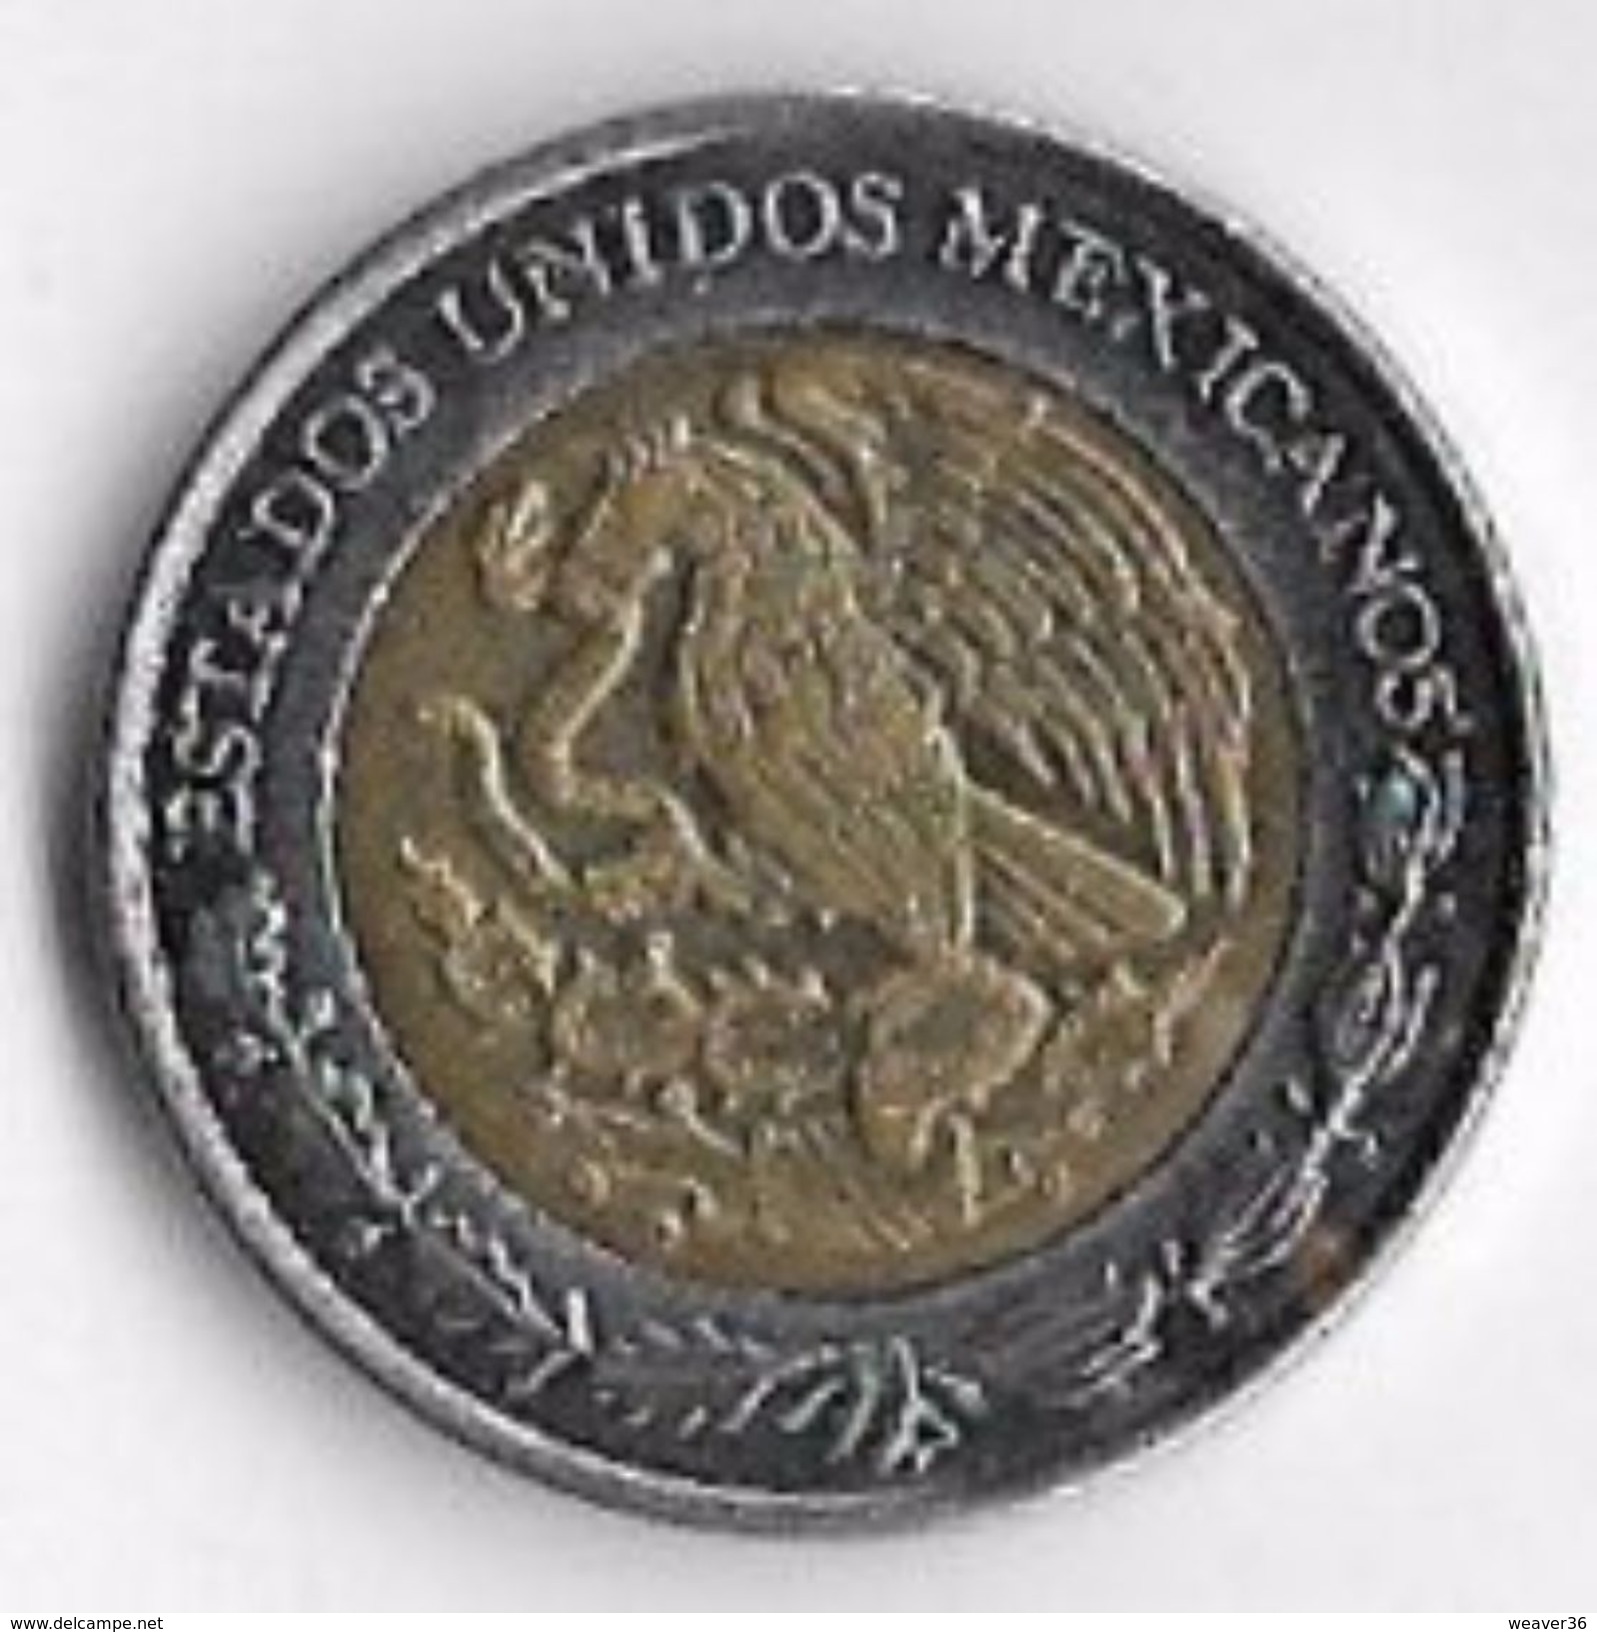 Mexico 2005 1 Peso (1) [C647/2D] - Mexico